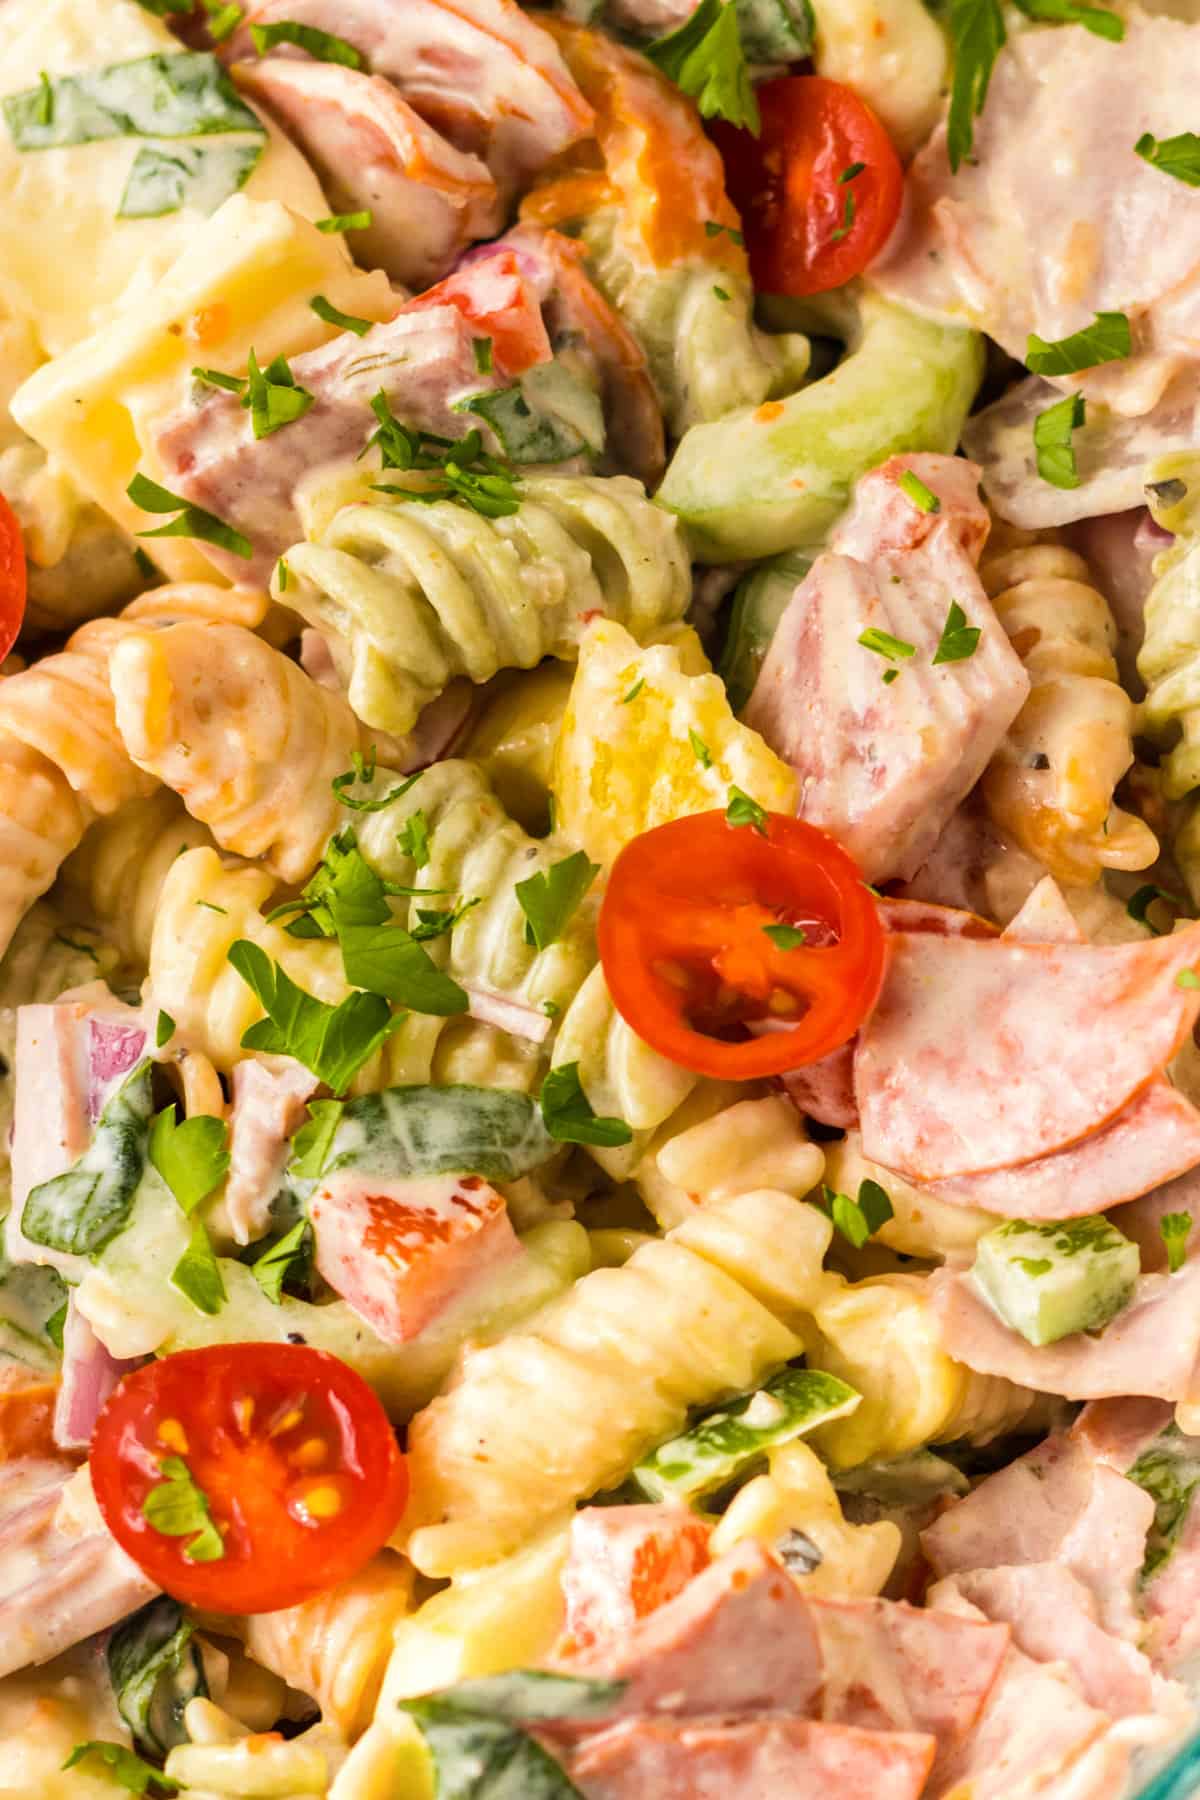 Italian hoagie pasta salad with cold cuts, veggies, and rotini pasta.